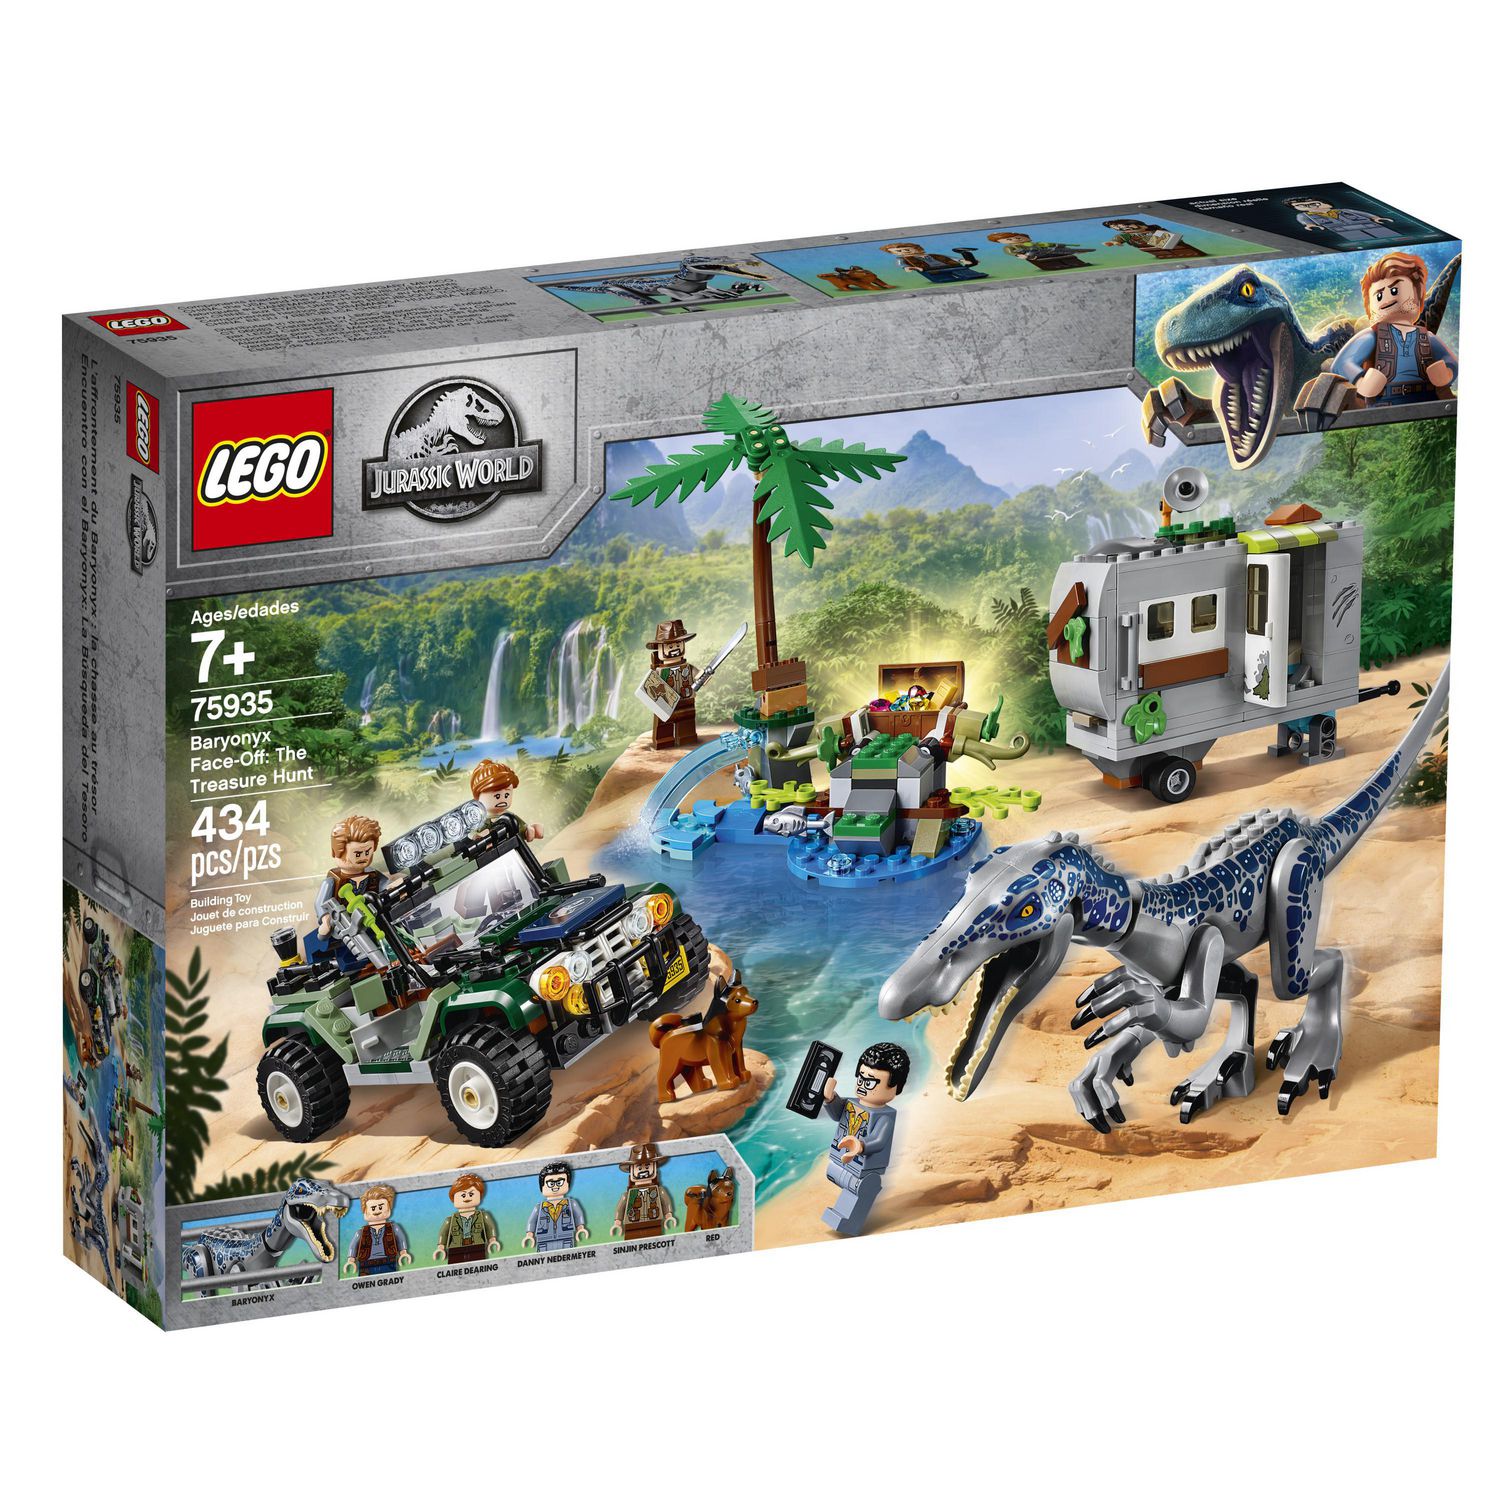 LEGO Jurassic World Baryonyx Face-Off: The Treasure Hunt 75935 Toy Building  Kit